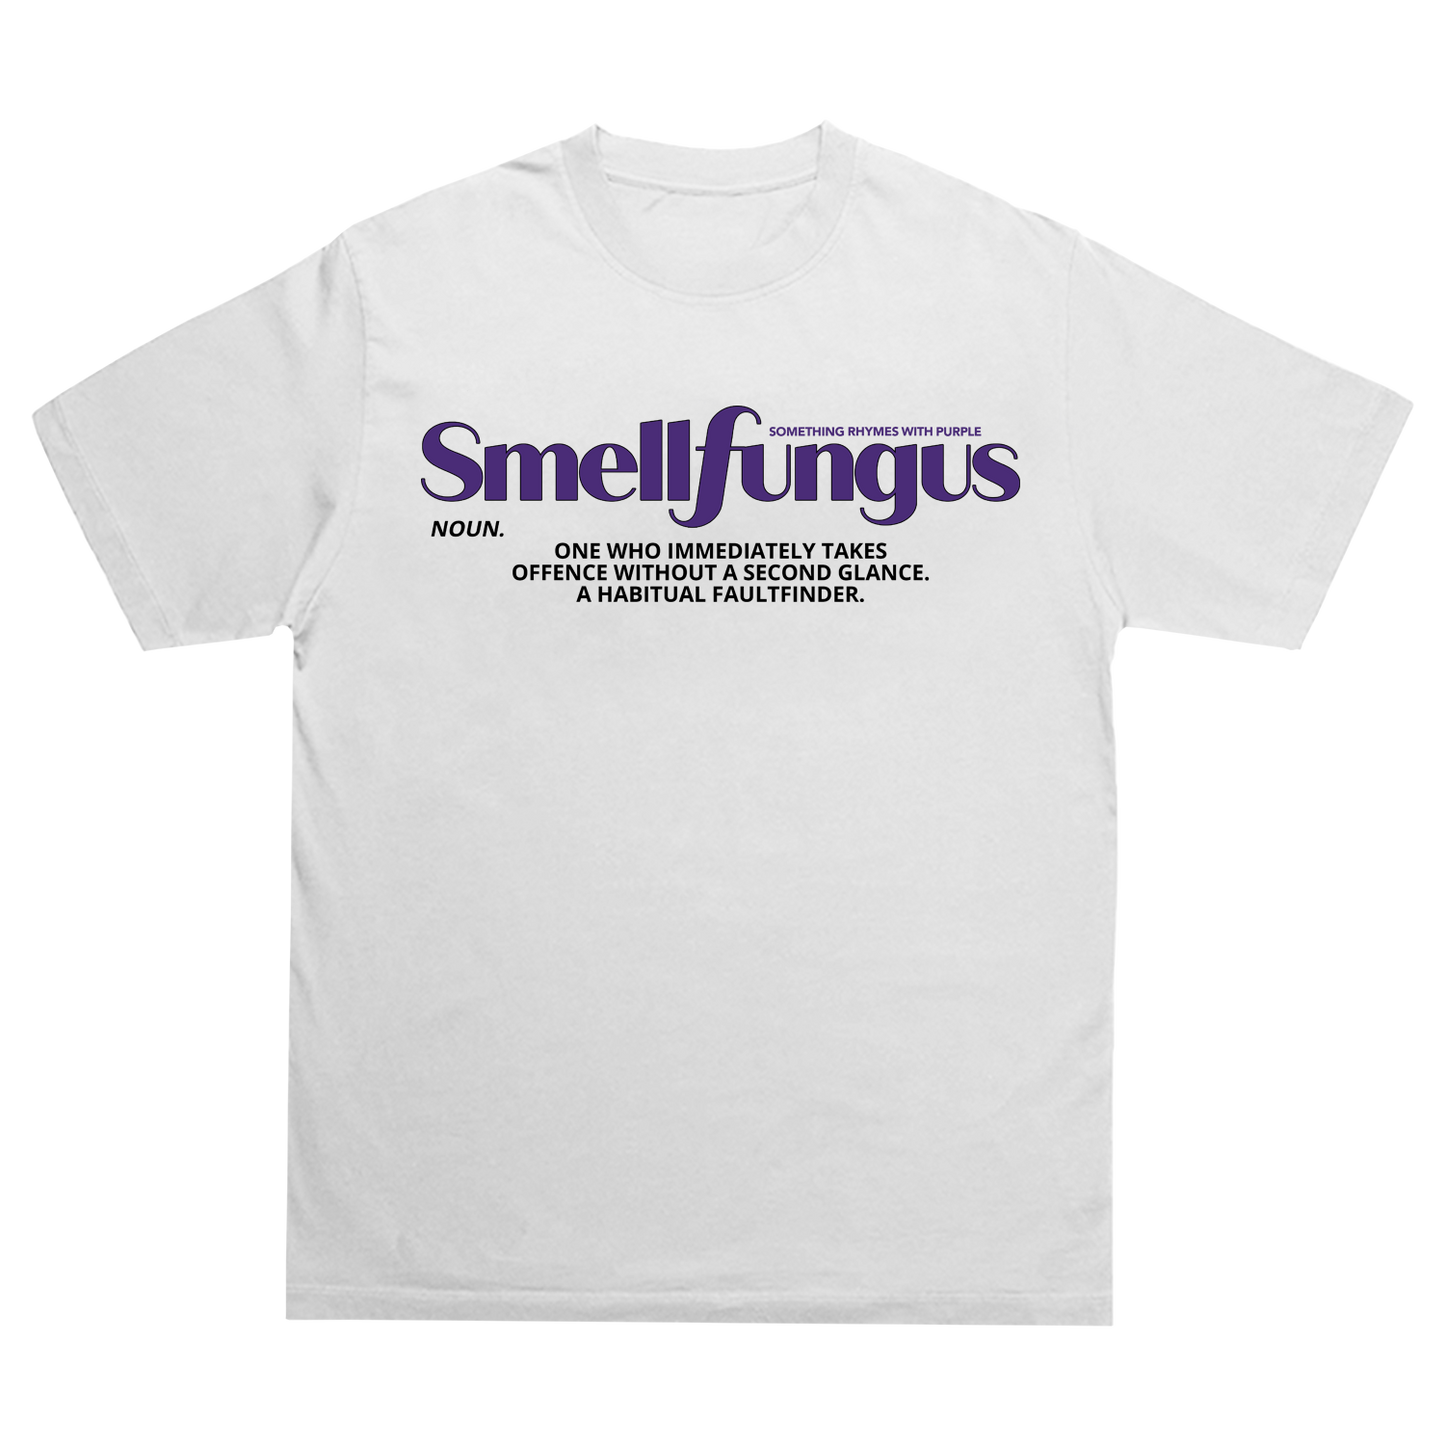 Smell Fungus White T-shirt